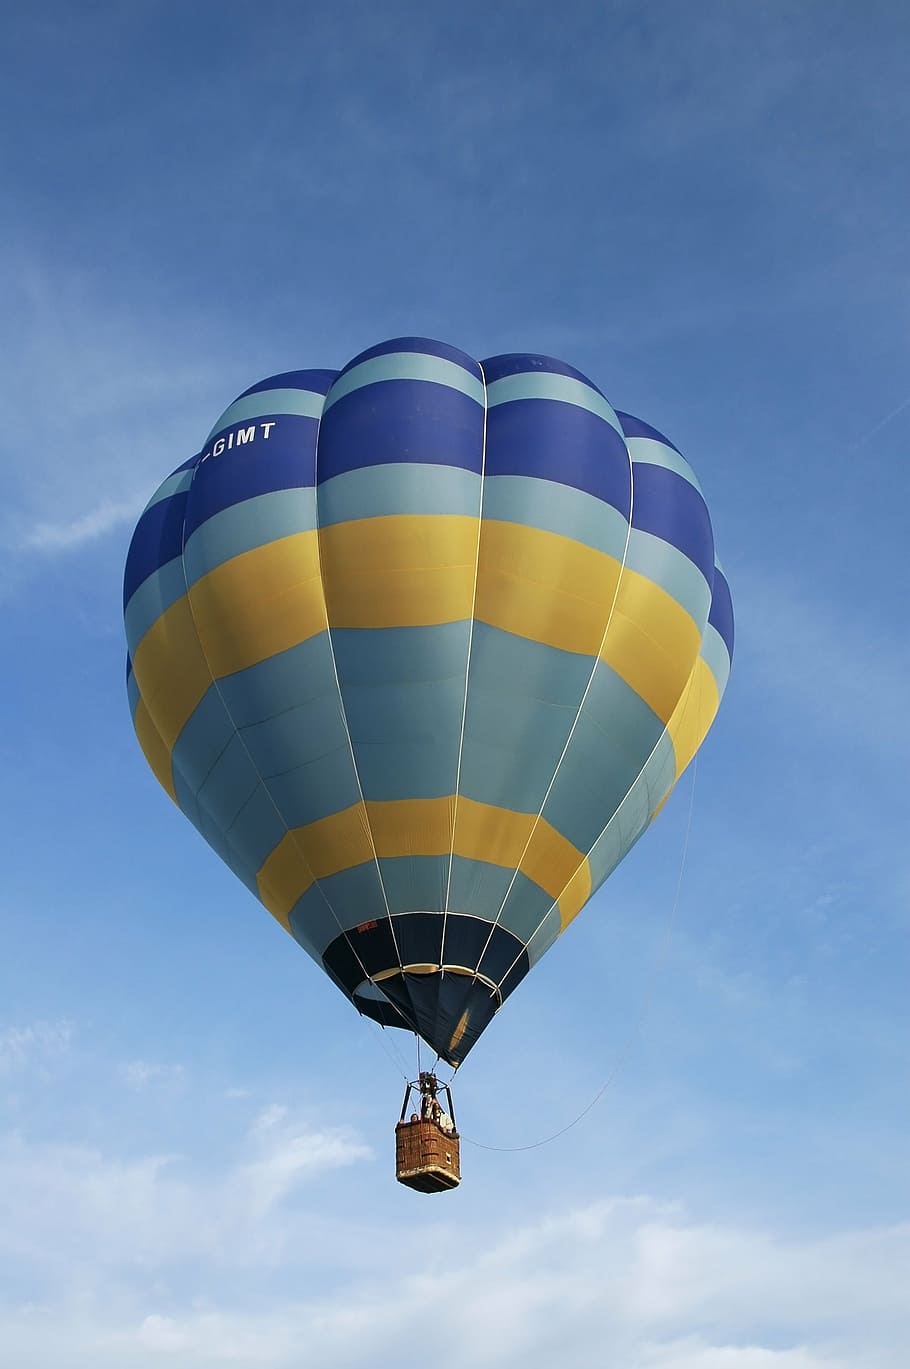 hot-air ballooning, sky, baloon, blue, air vehicle, hot air balloon